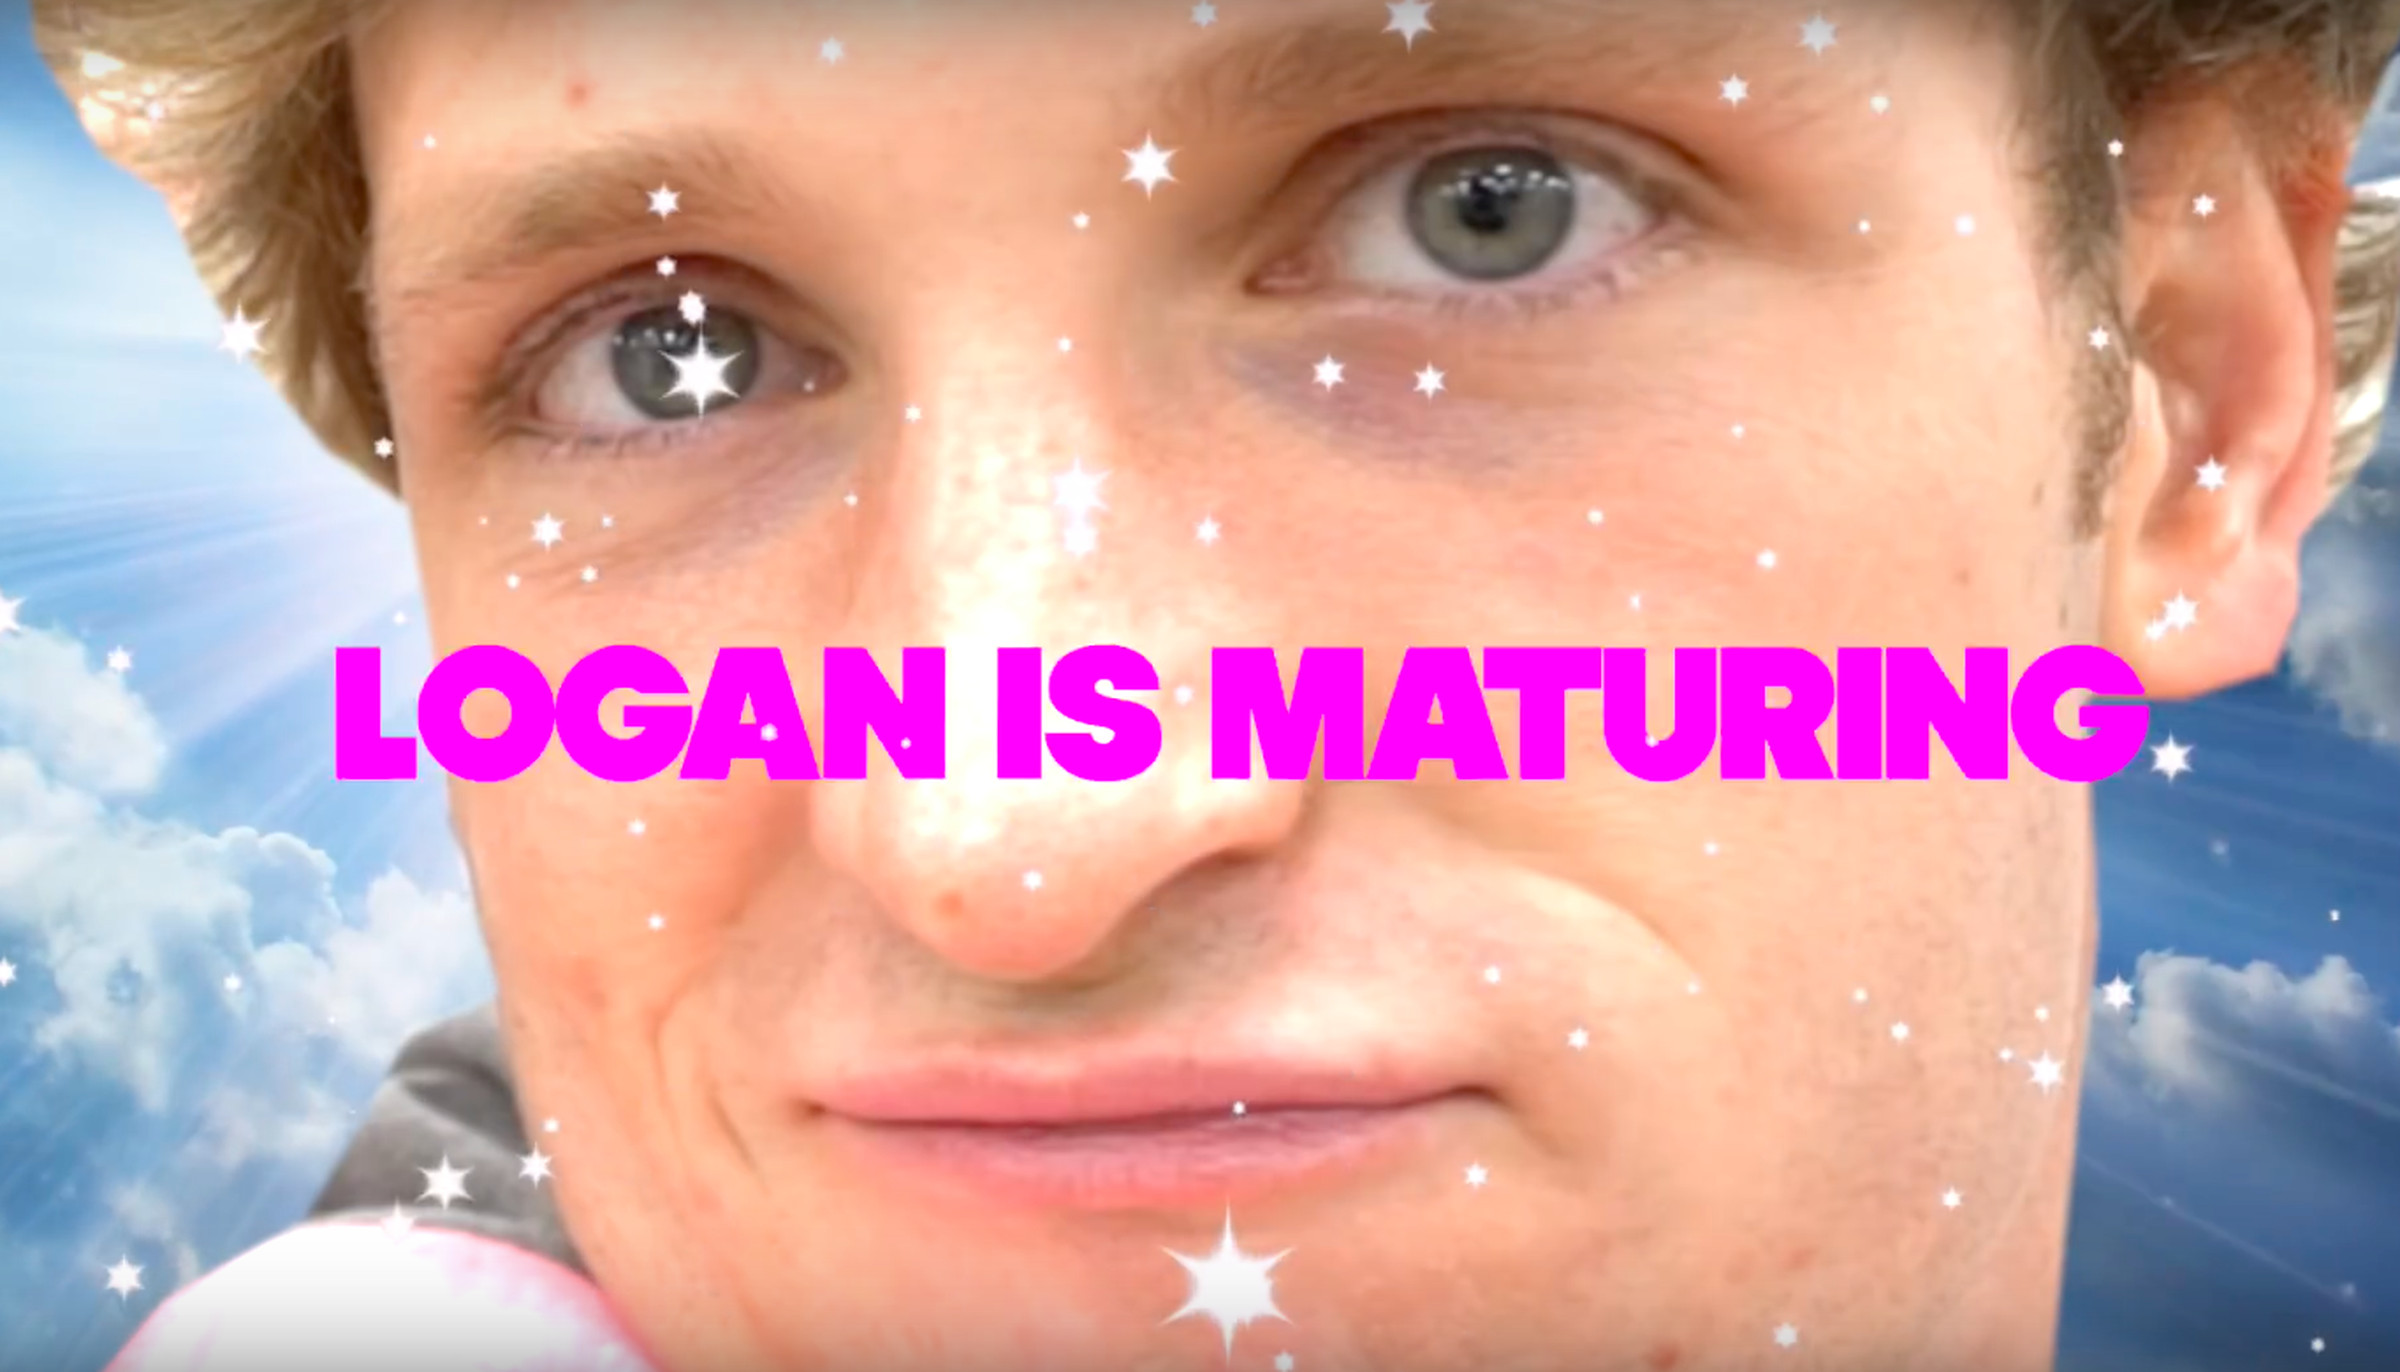 A gag in a Logan Paul vlog.